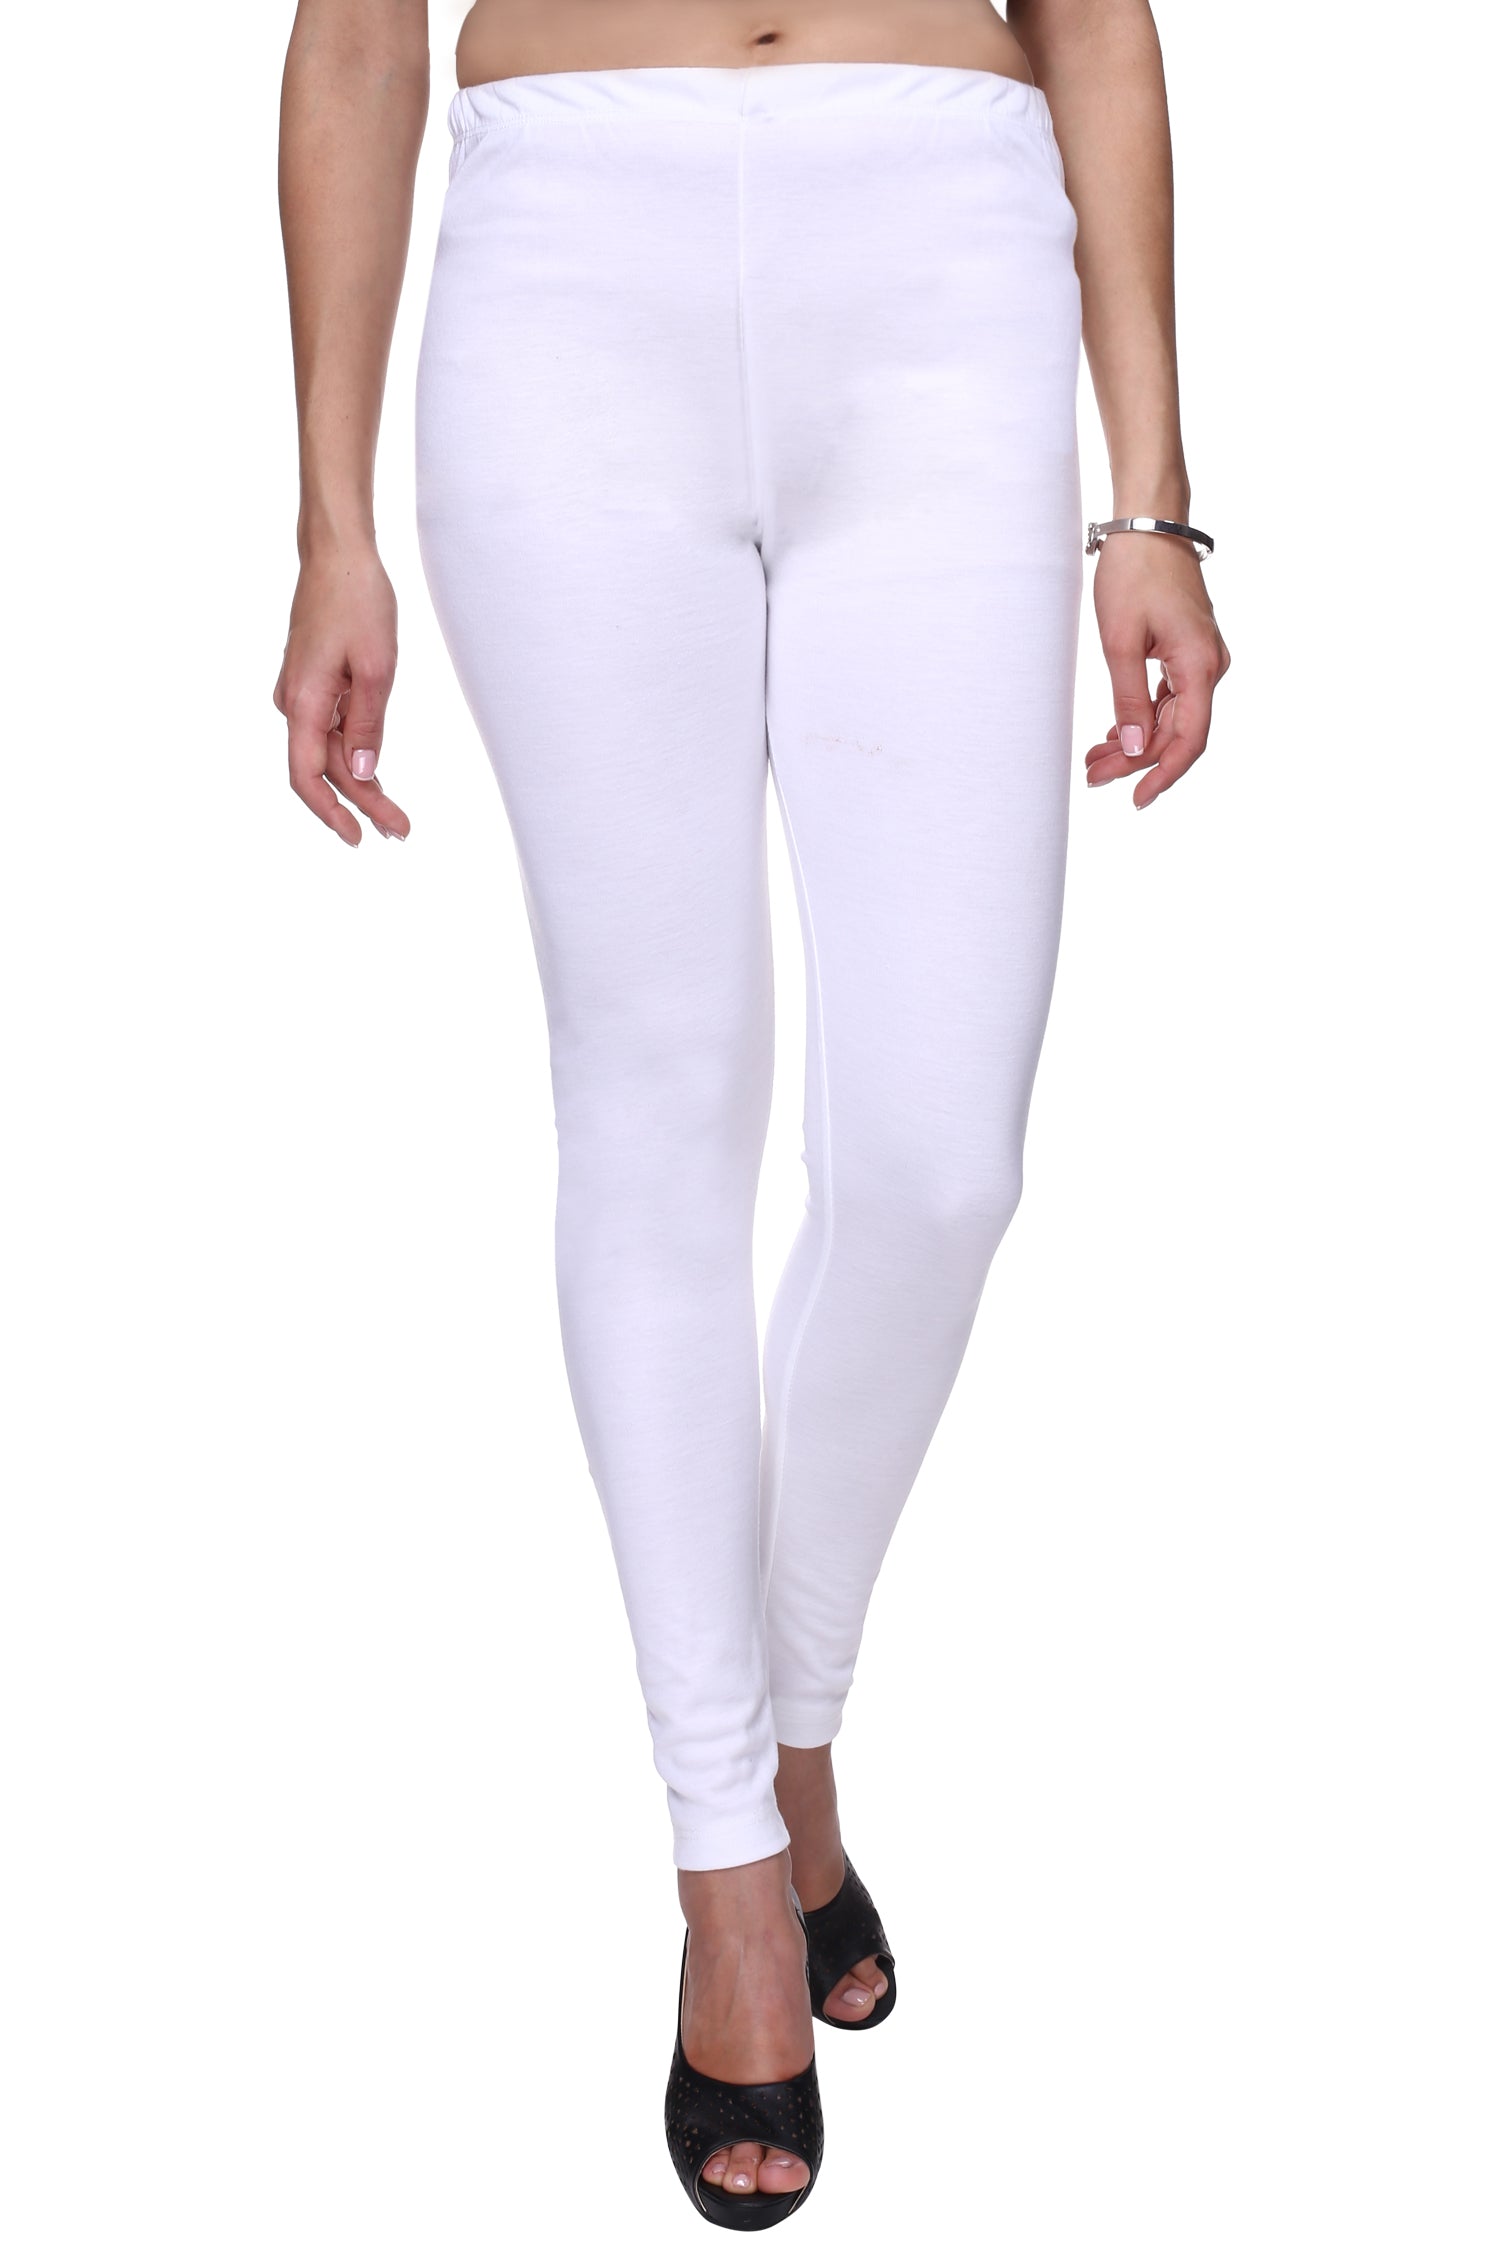 TRASA Women's Cotton Slim Fit Churidar Leggings - White –